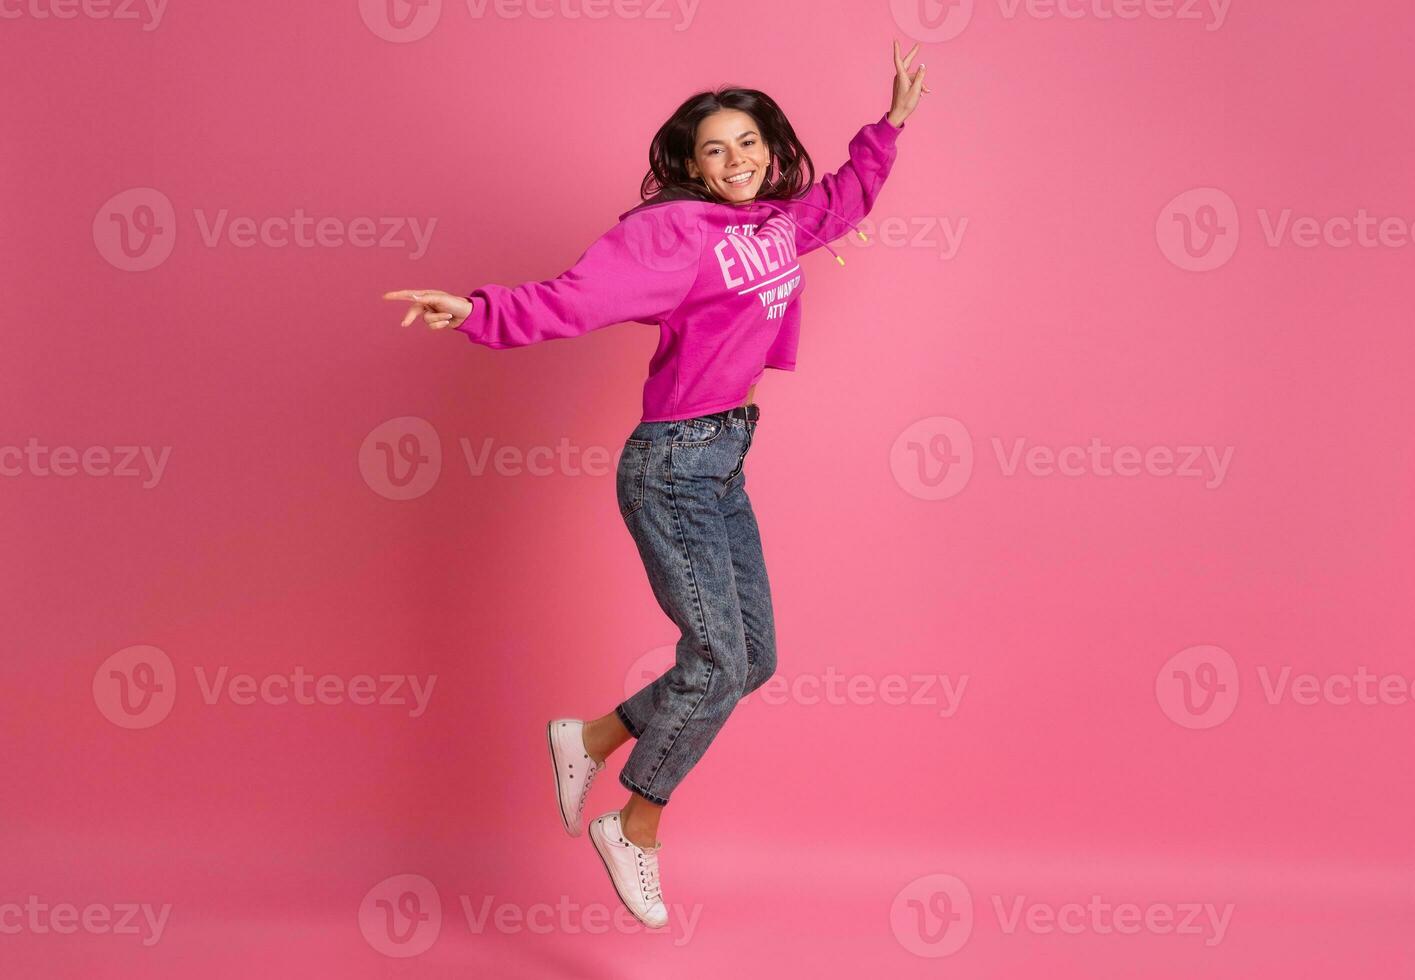 spaans mooi vrouw in roze capuchon glimlachen jumping foto